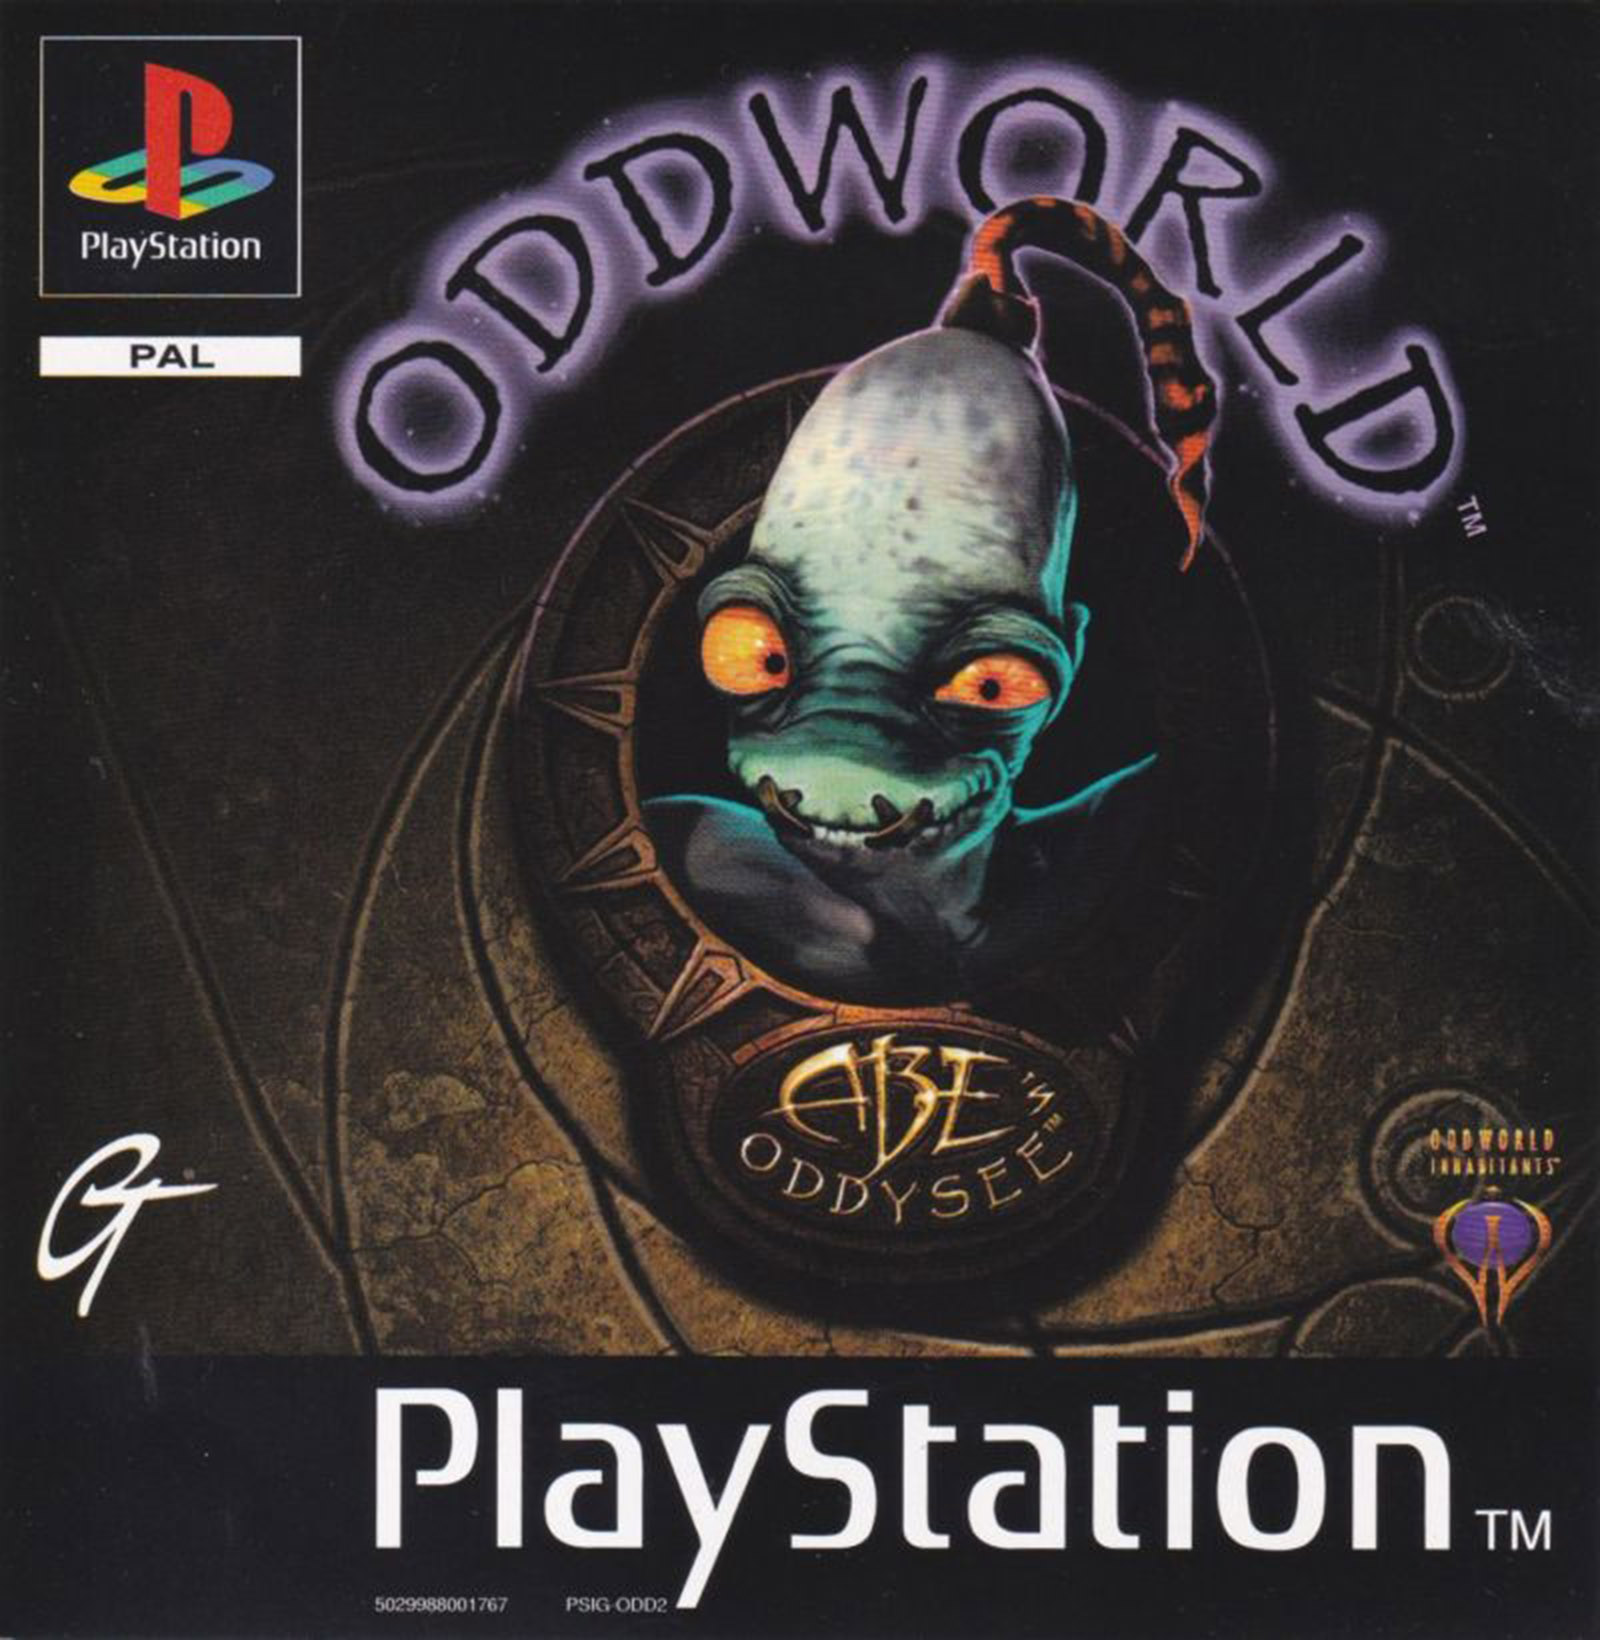 Oddworld - Abe's Oddysee PSX cover